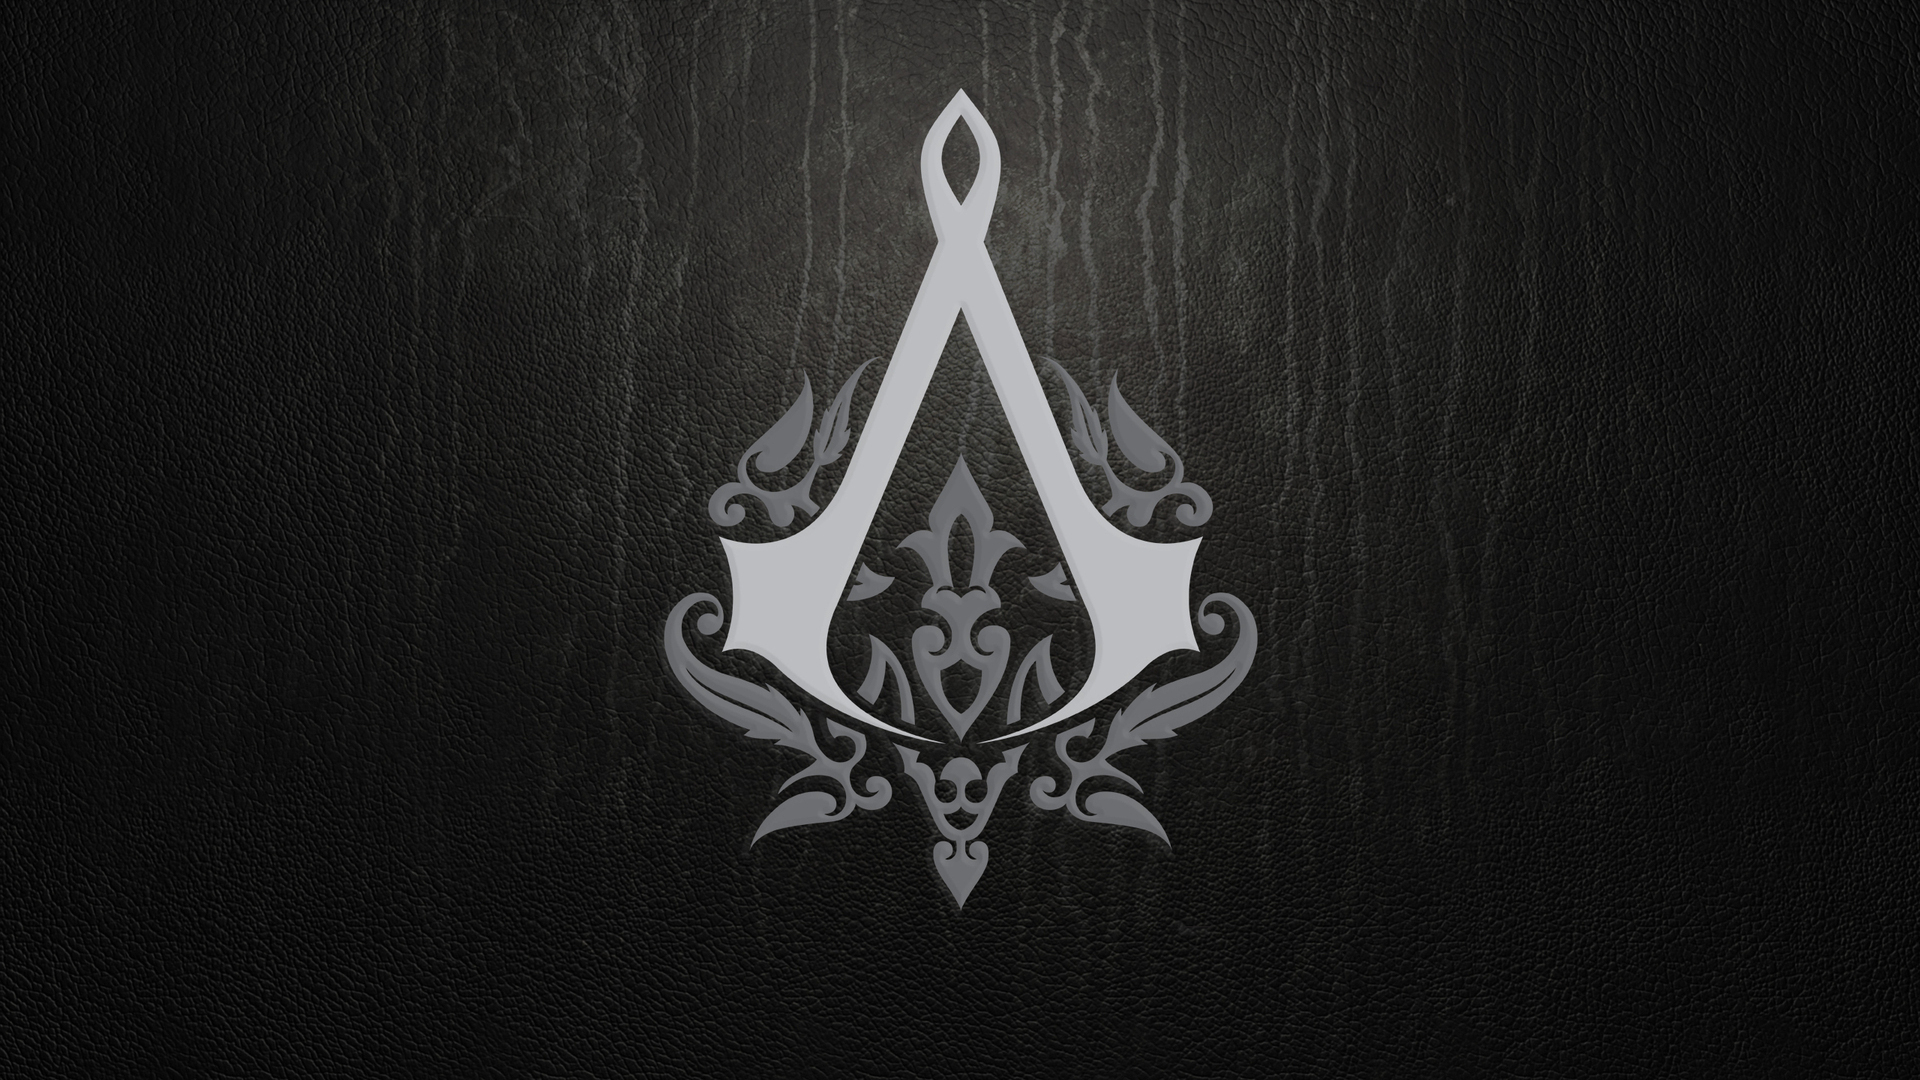 Assassins Creed Logo Wallpaper HD Desktop Pictures In High